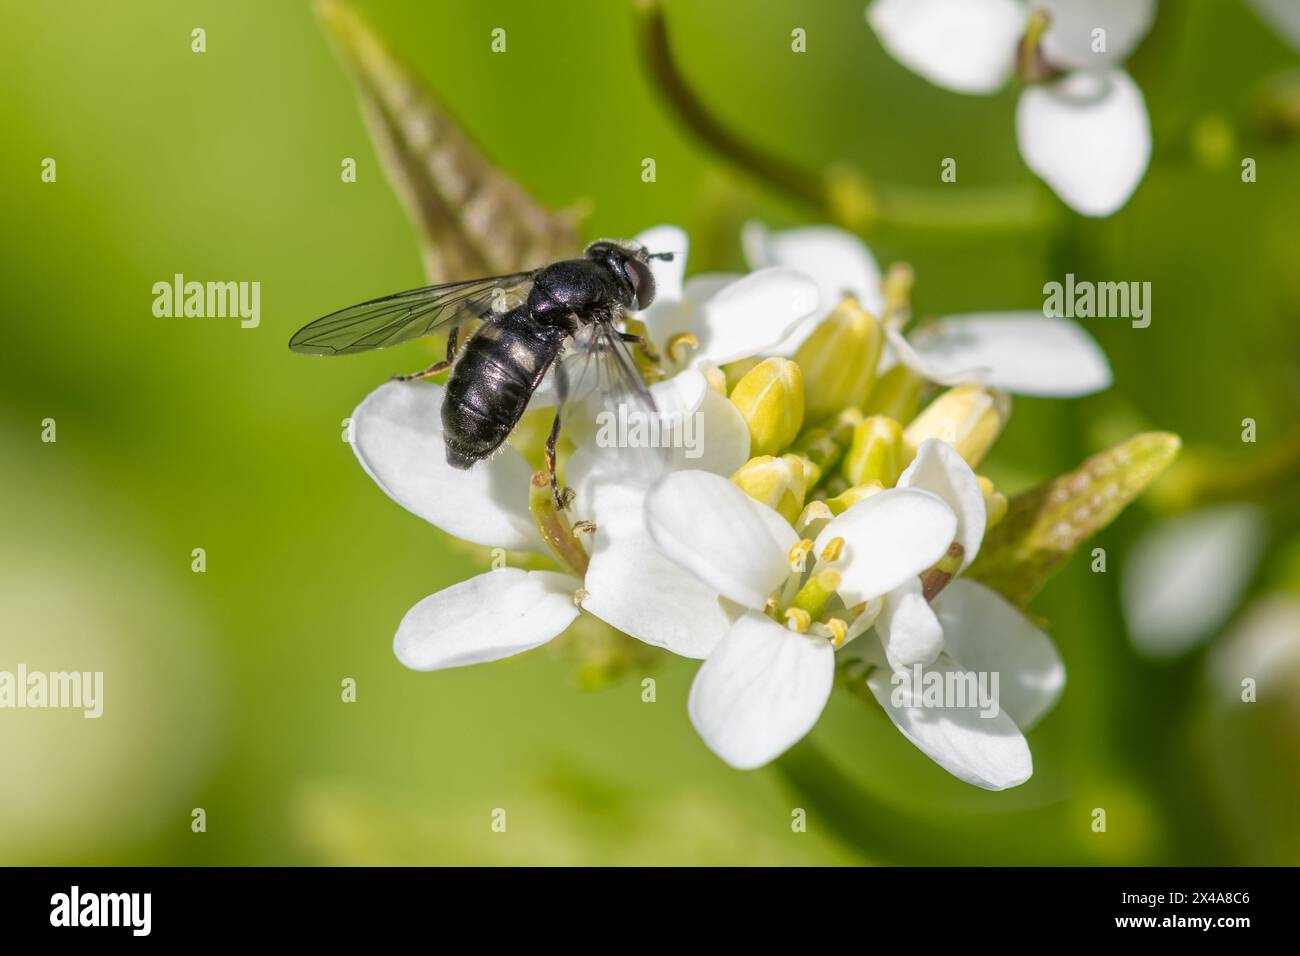 Insect or black fly pollinator diptera species on garlic mustard wildflower (Alliaria petiolata), England, UK Stock Photo